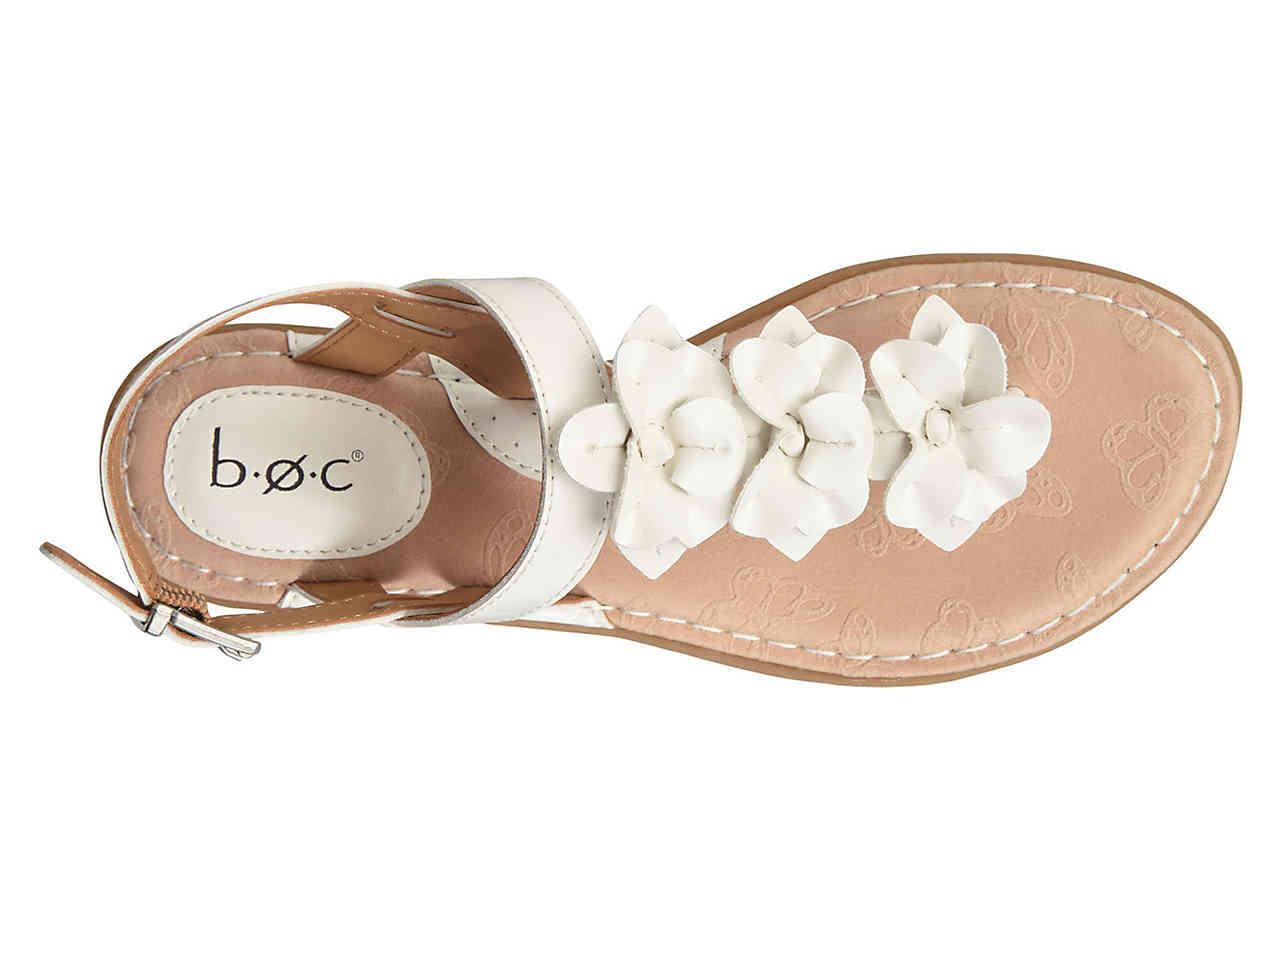 boc showers sandal